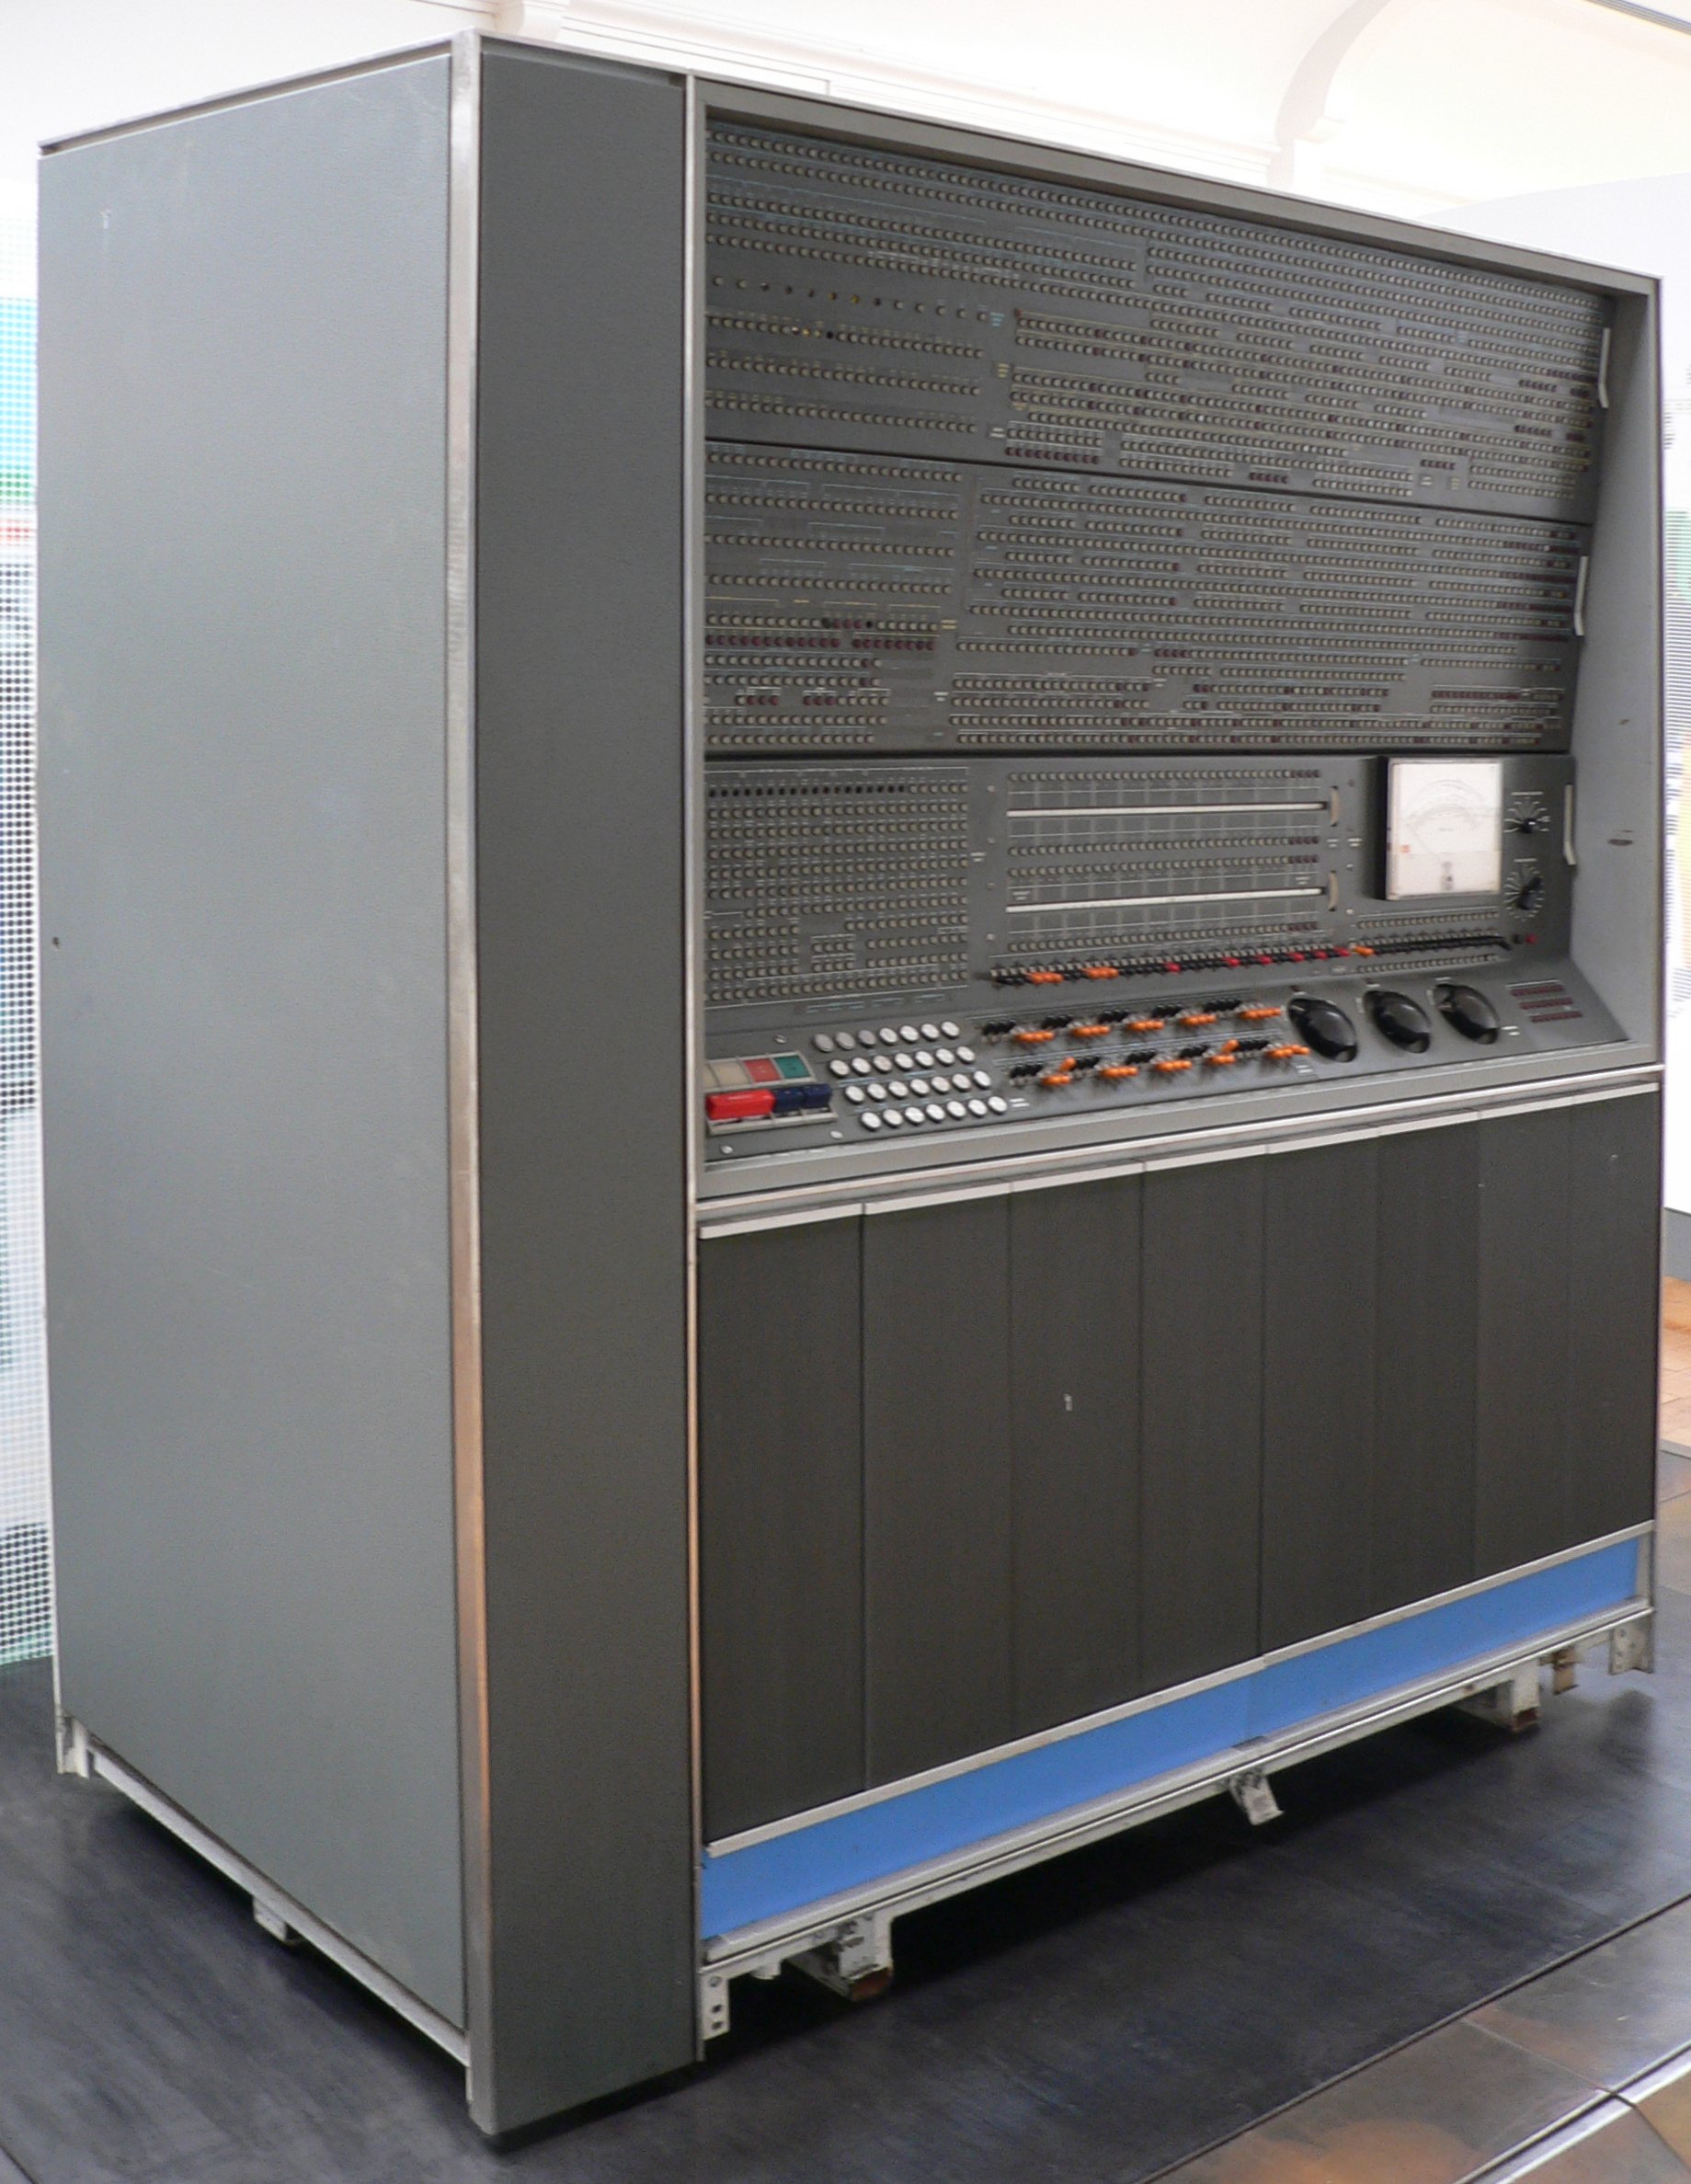 Самый мощный суперкомпьютер 60-х. Краткая история IBM Stretch - 5